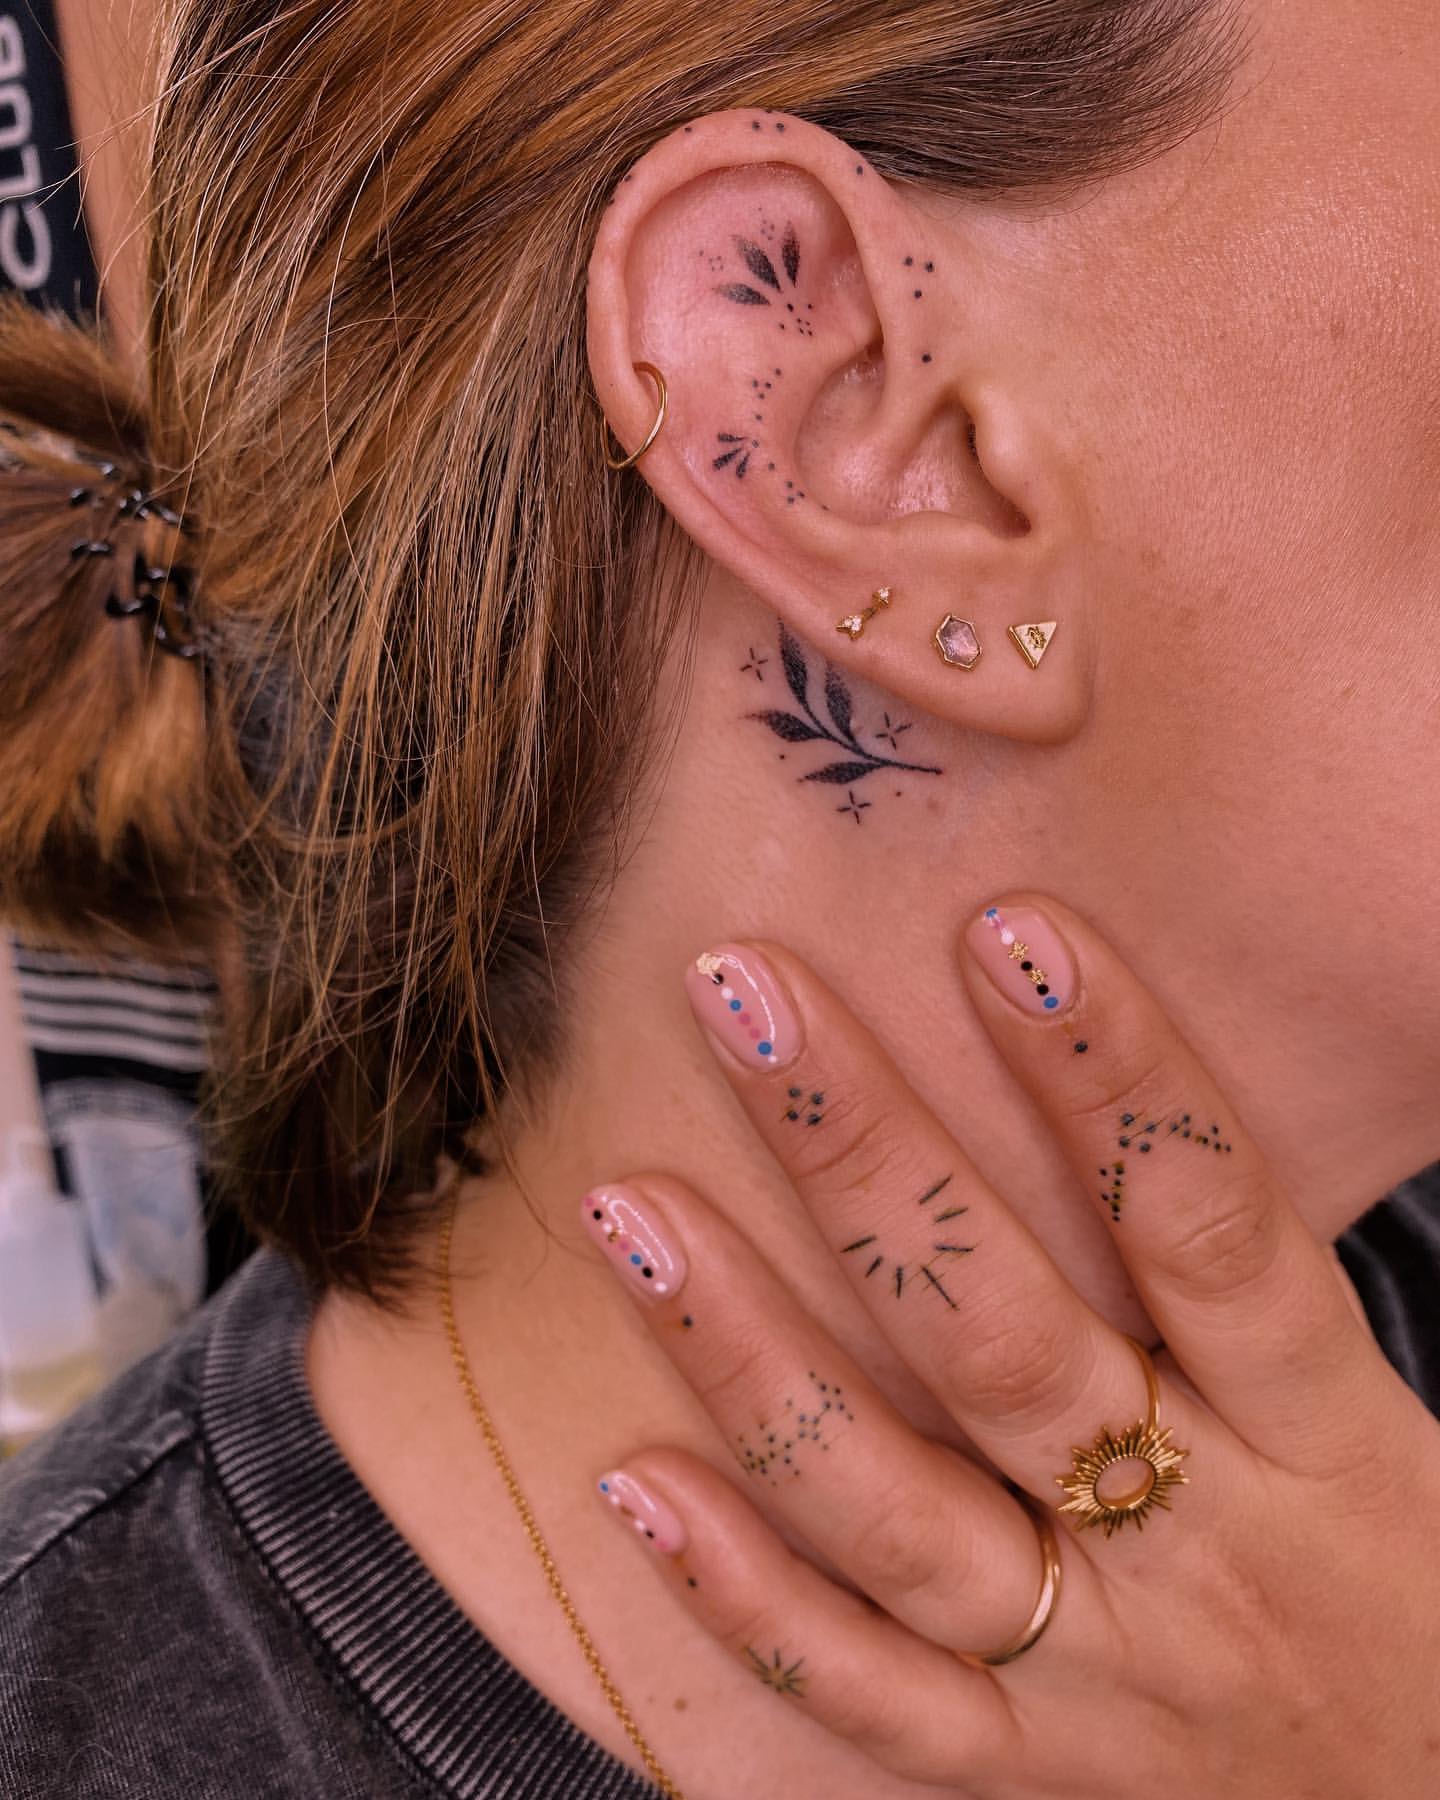 Behind the Ear Tattoos 13